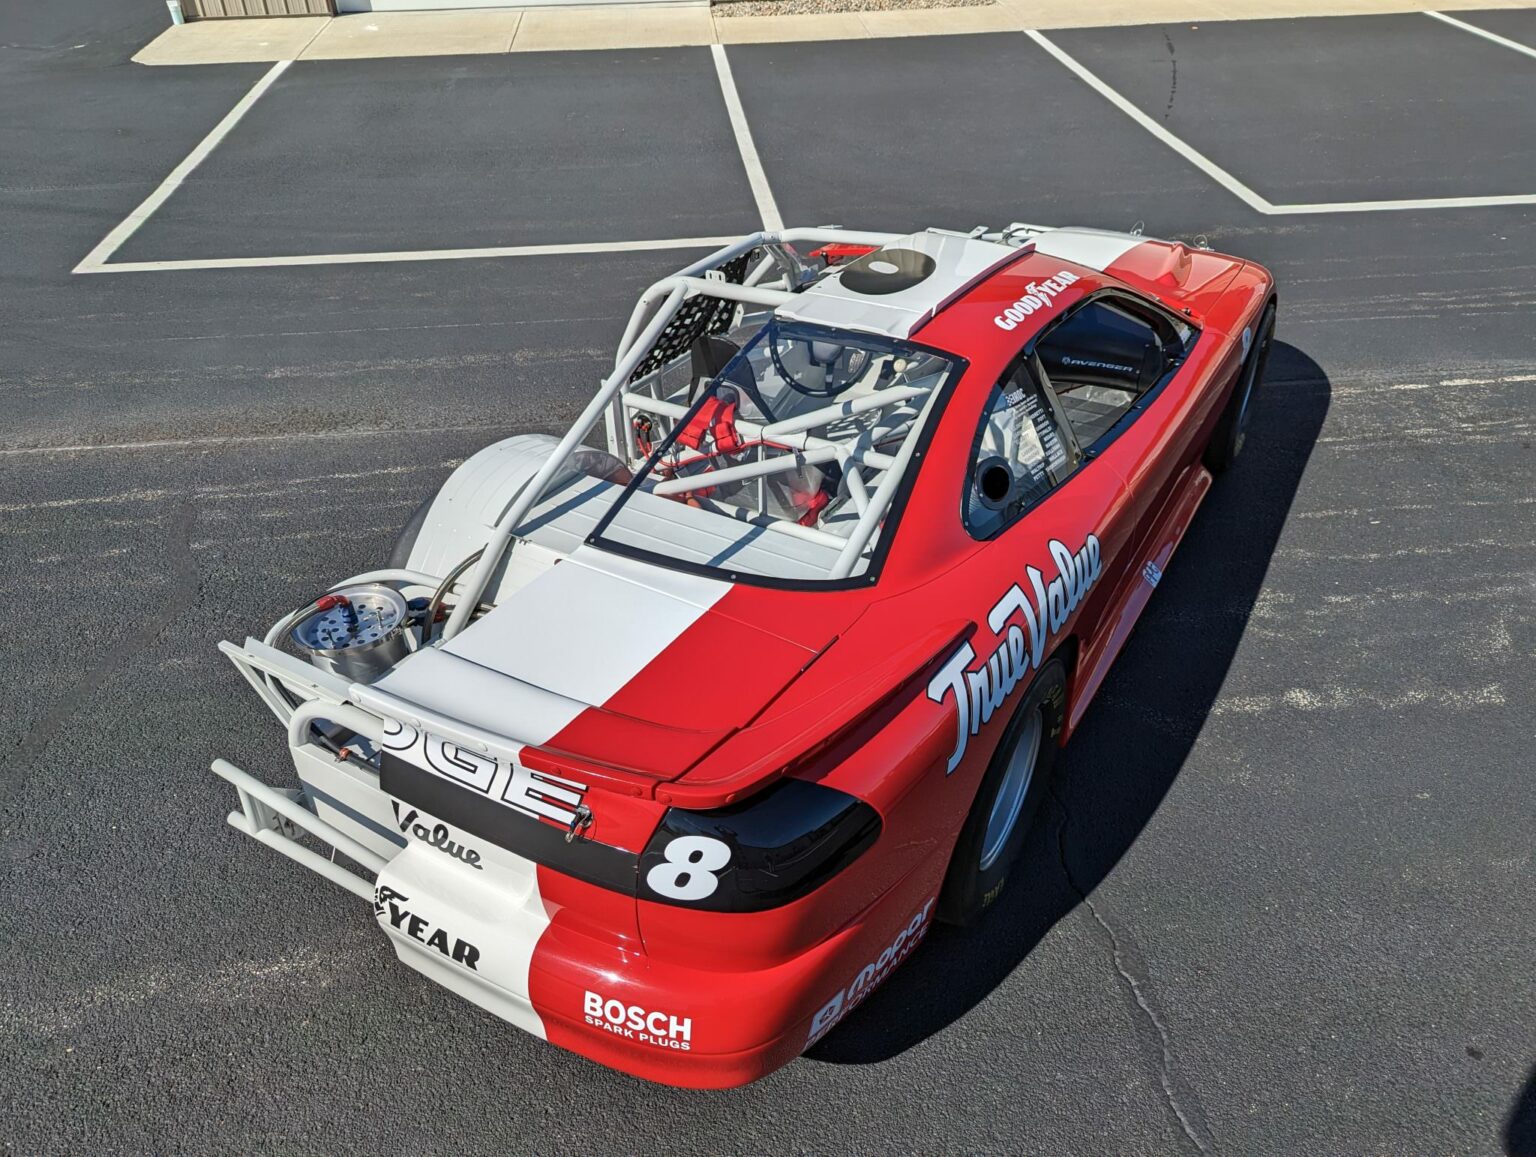 For Sale: A Race-Ready Dodge Avenger Cutaway IROC Car